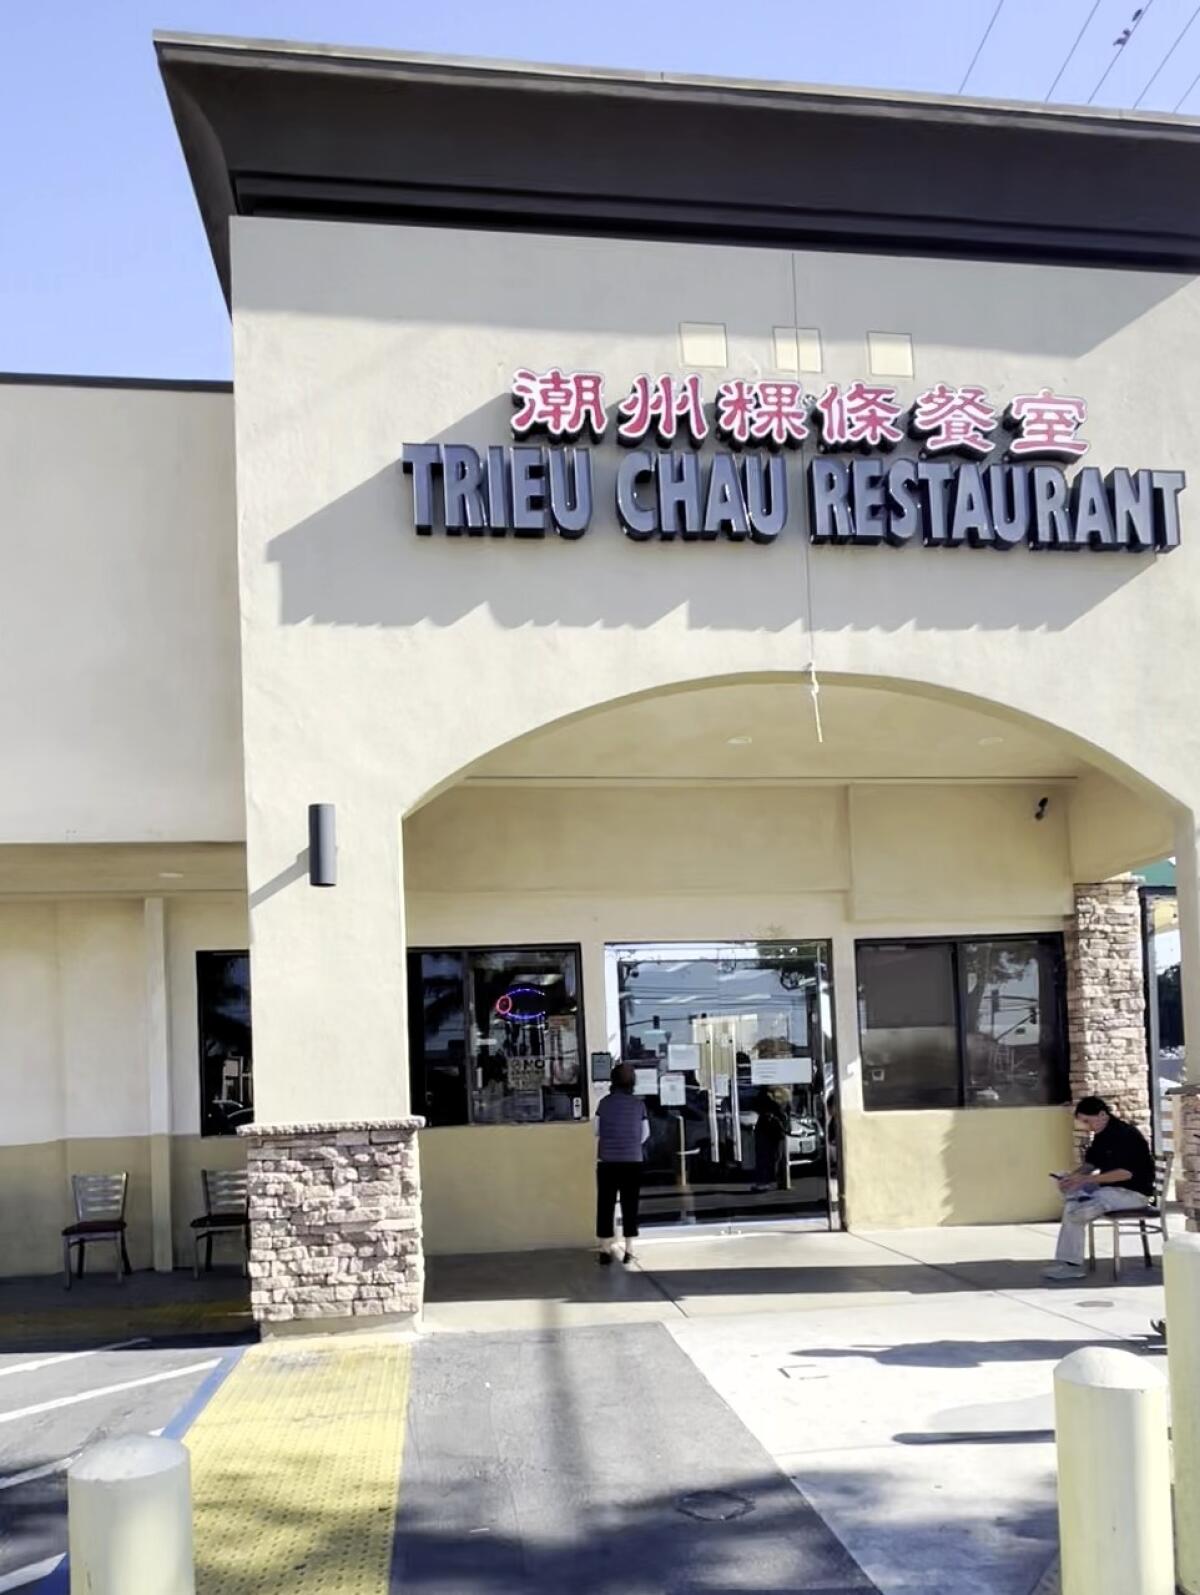 Trieu Chau Restaurant in Santa Ana has a loyal fan base despite its modest physical space.